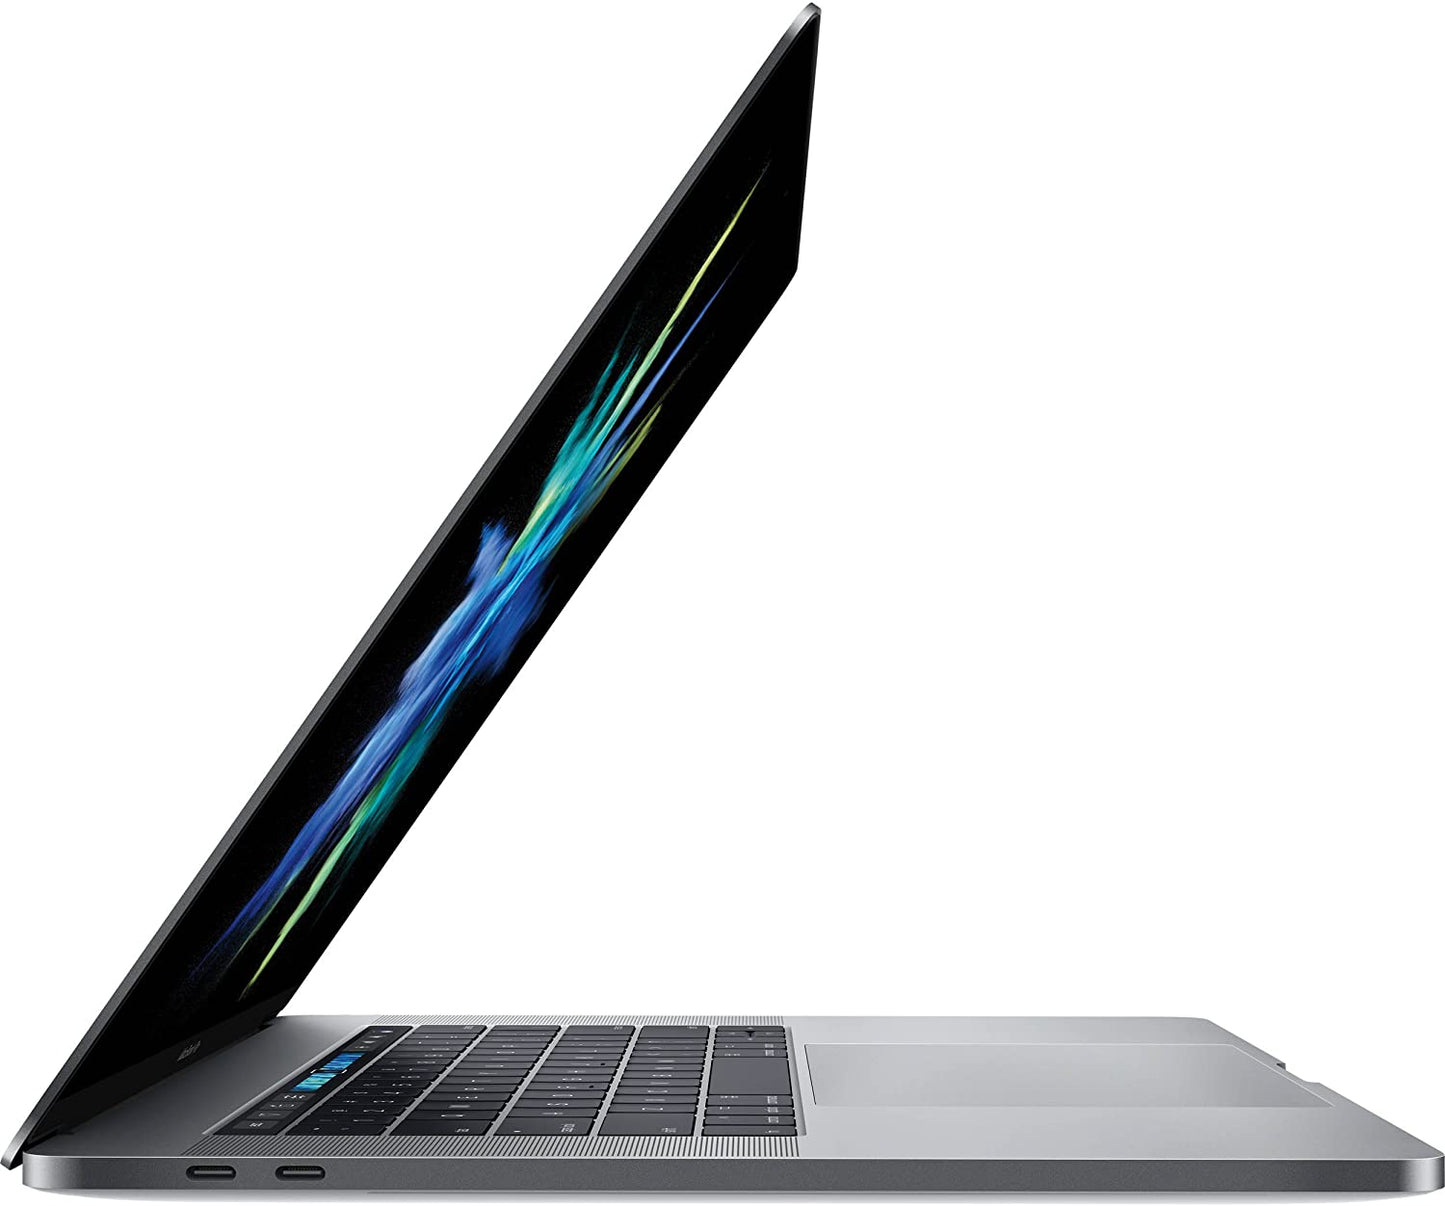 Apple MacBook Pro 2016| A1707 MLH42LL/A |Corei7 |16GB RAM |512GB SSD